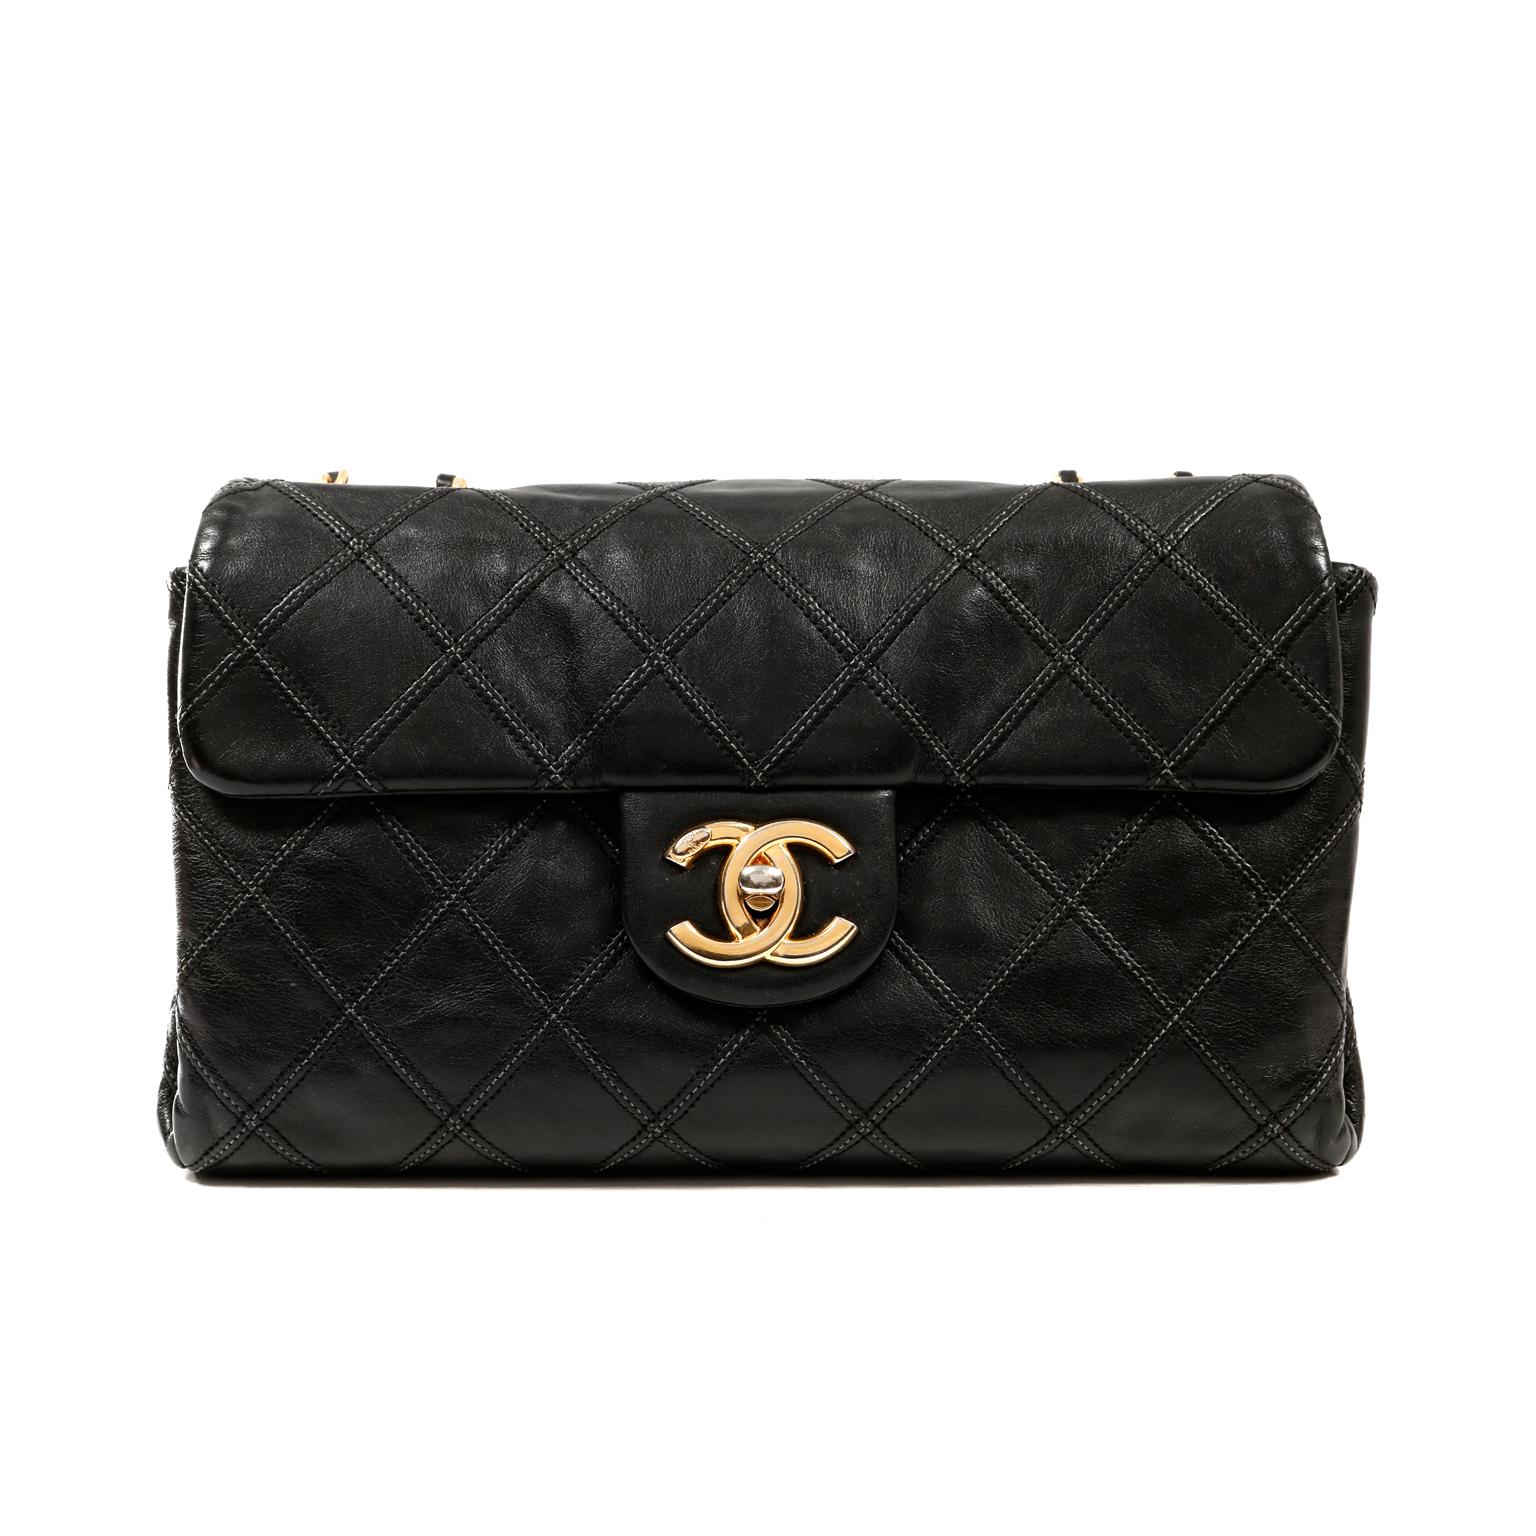 Women's Chanel Black Flat Stitched Leather Flap Bag